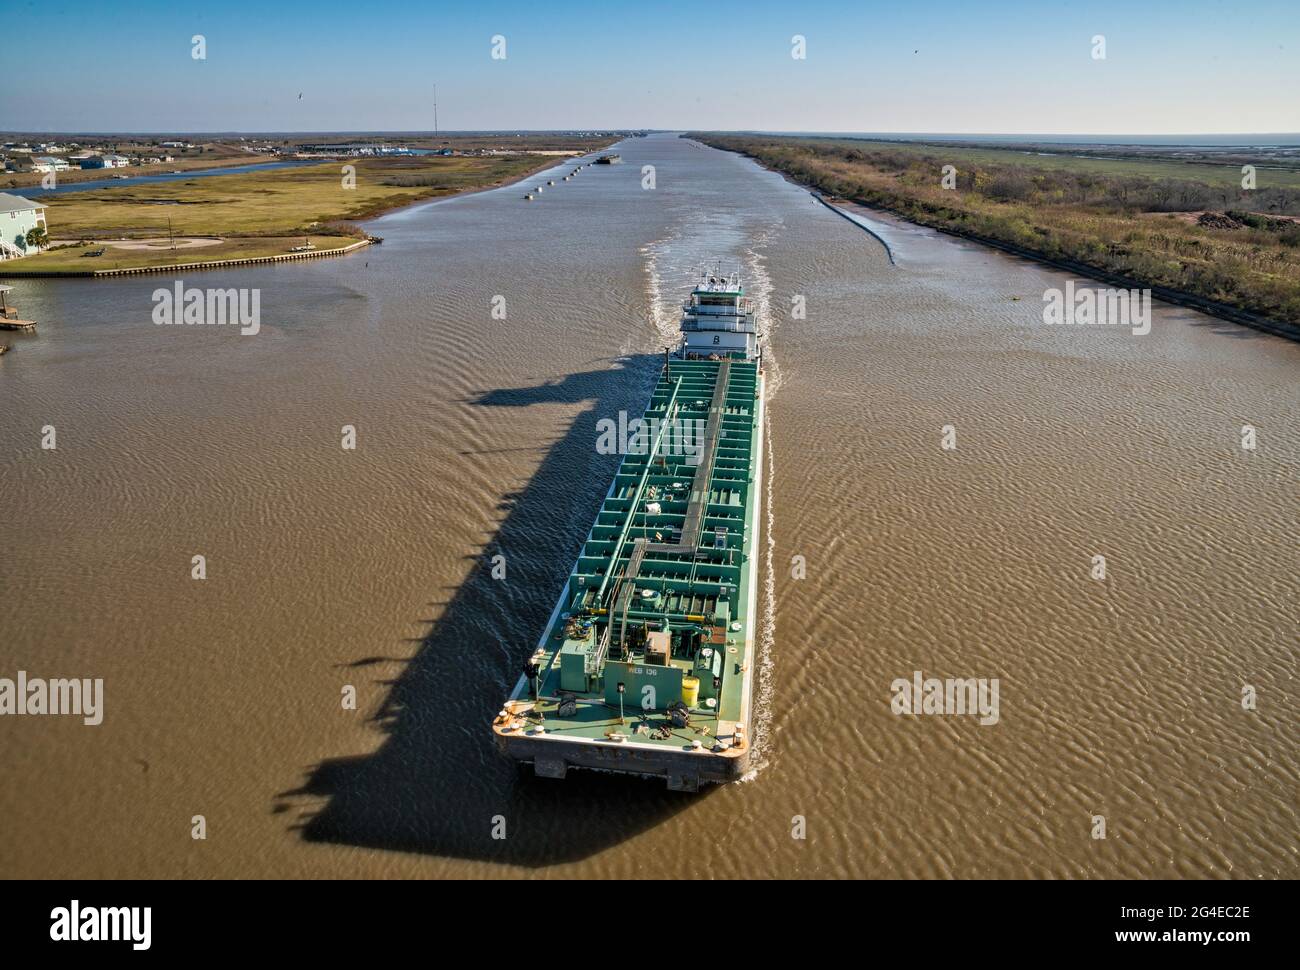 Barge at Intracoastal Waterway, view from highway bridge in Matagorda, Texas, USA Stock Photo